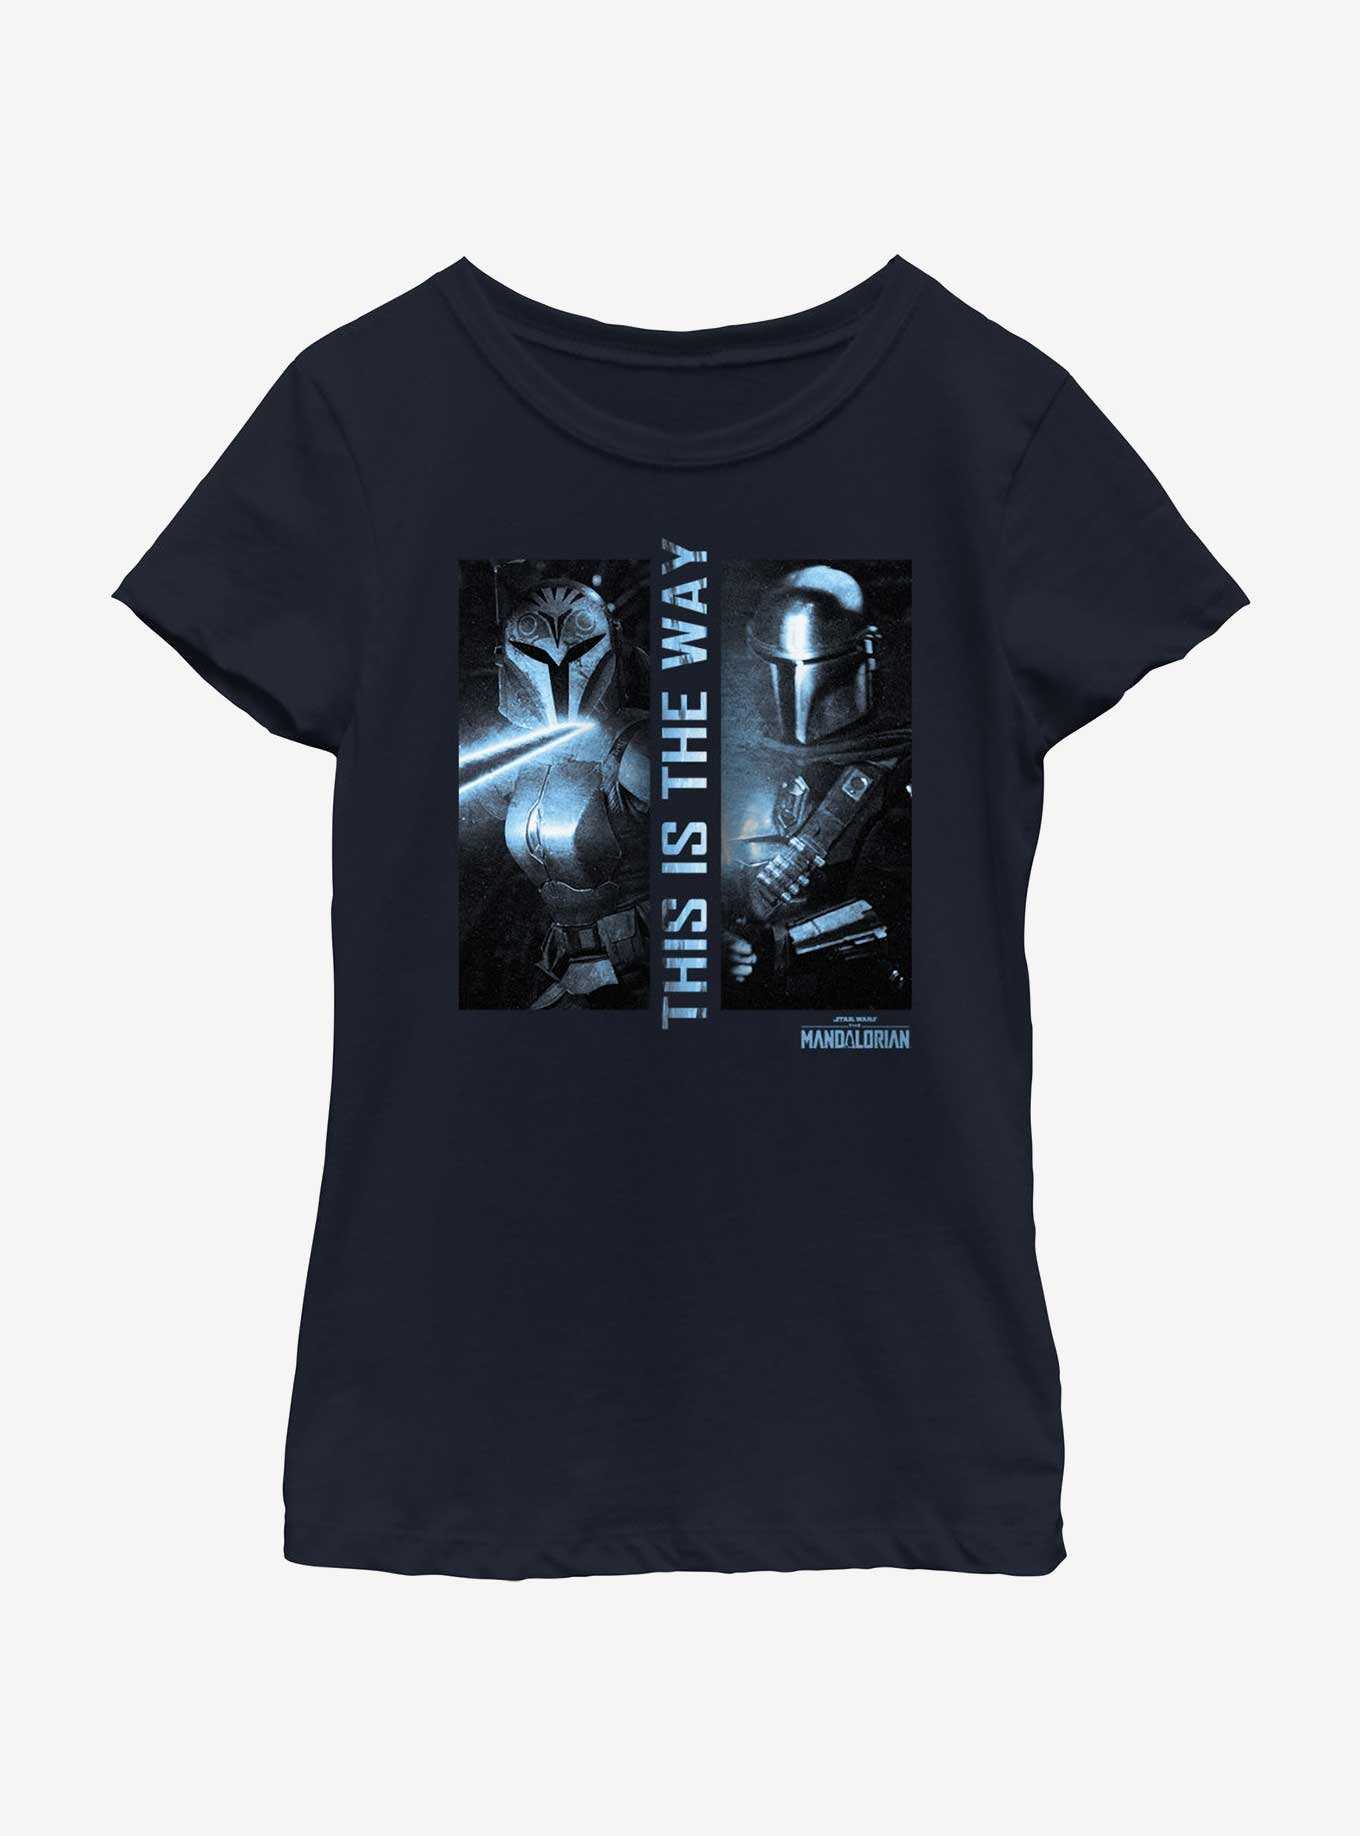 Star Wars The Mandalorian Dark Saber Youth Girls T-Shirt, , hi-res